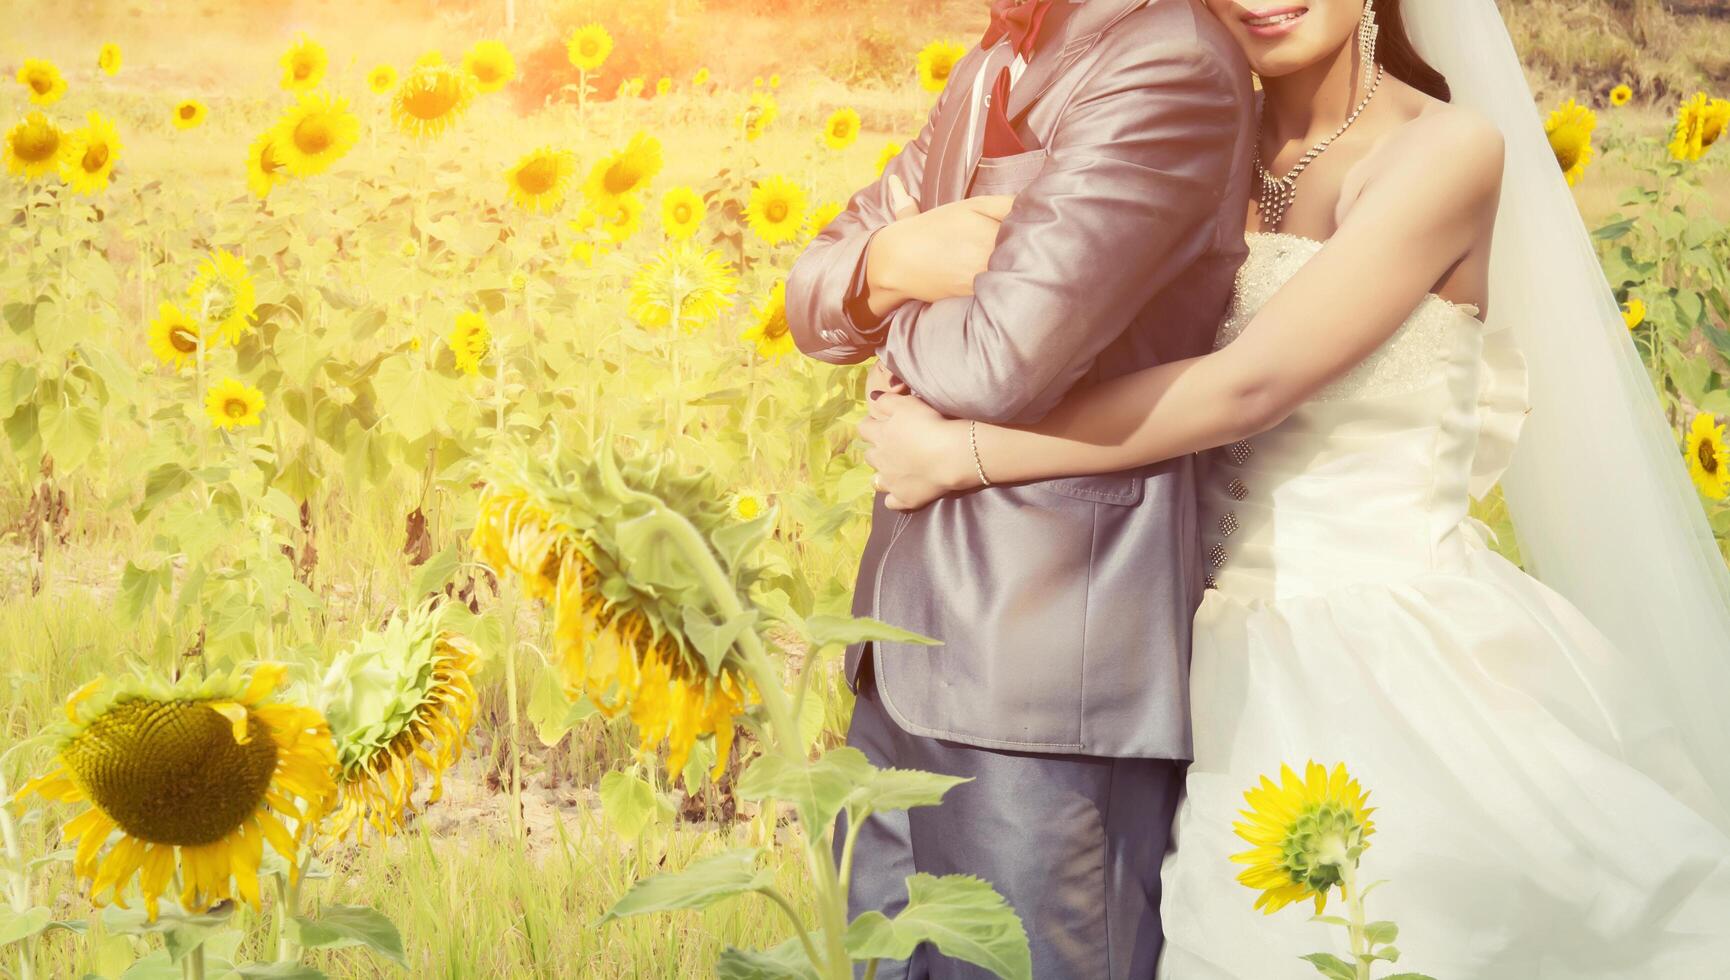 Bride and groom hug in sun flower garden photo